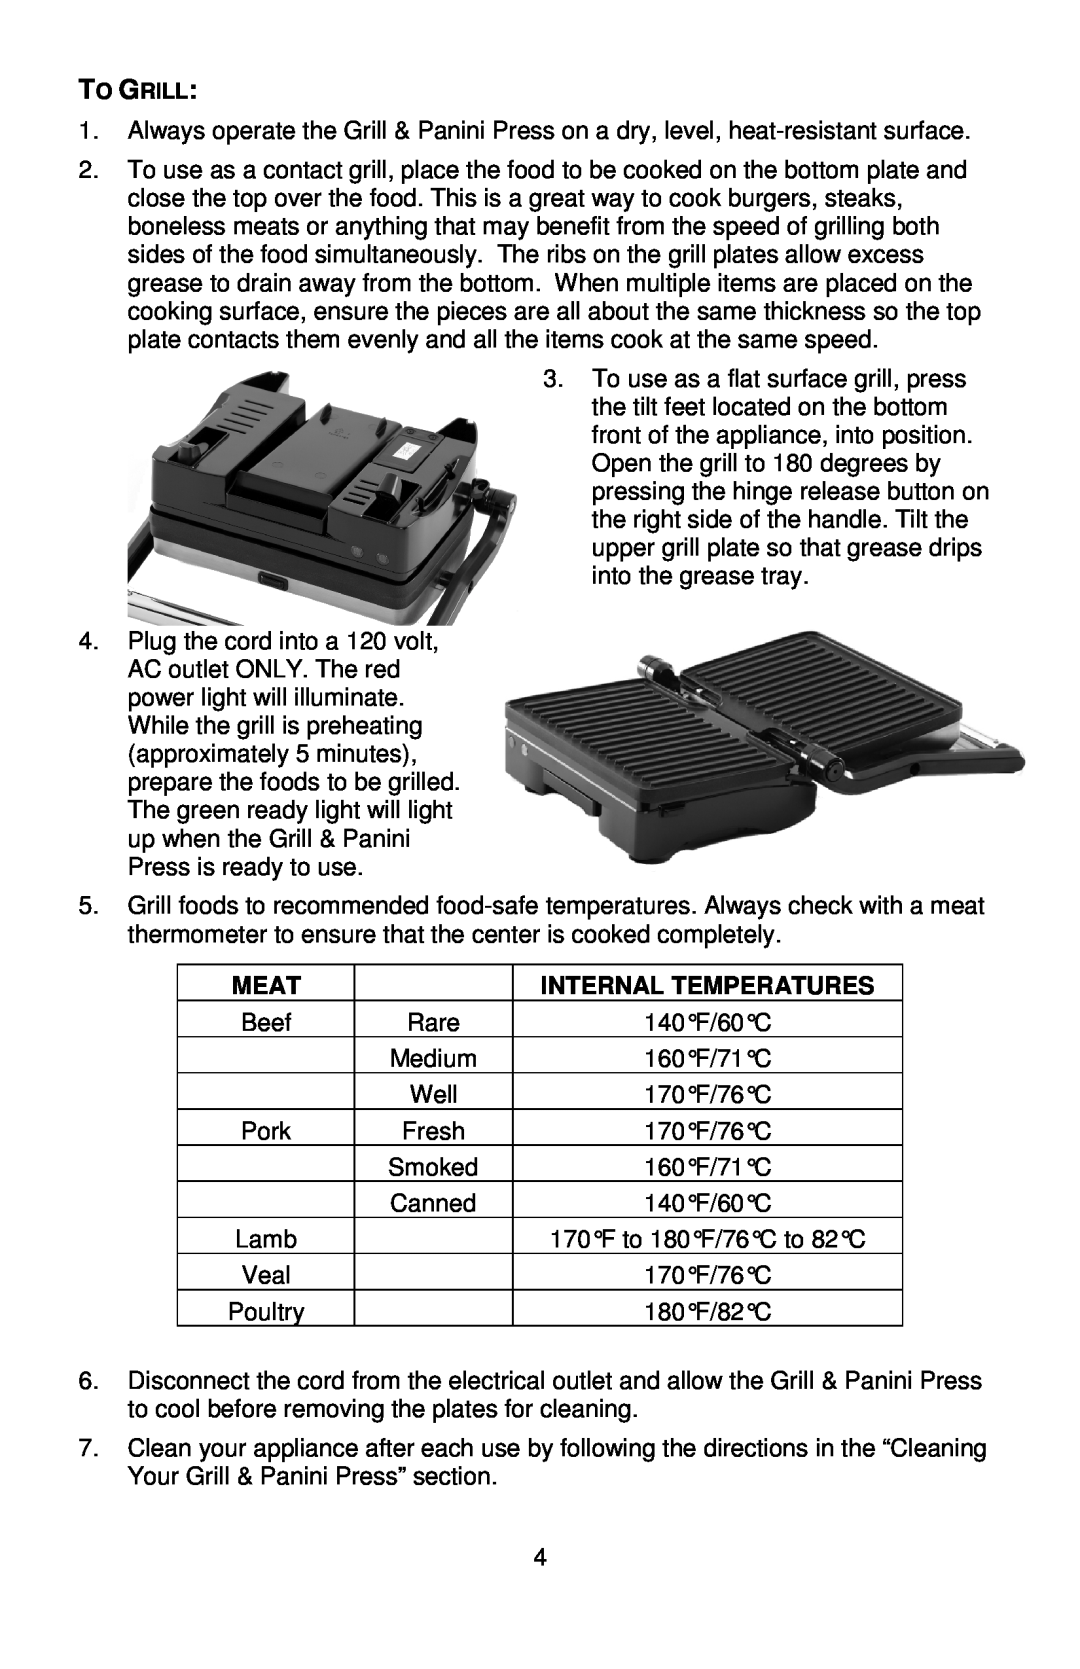 West Bend L5789, 6113 instruction manual Meat, Internal Temperatures 